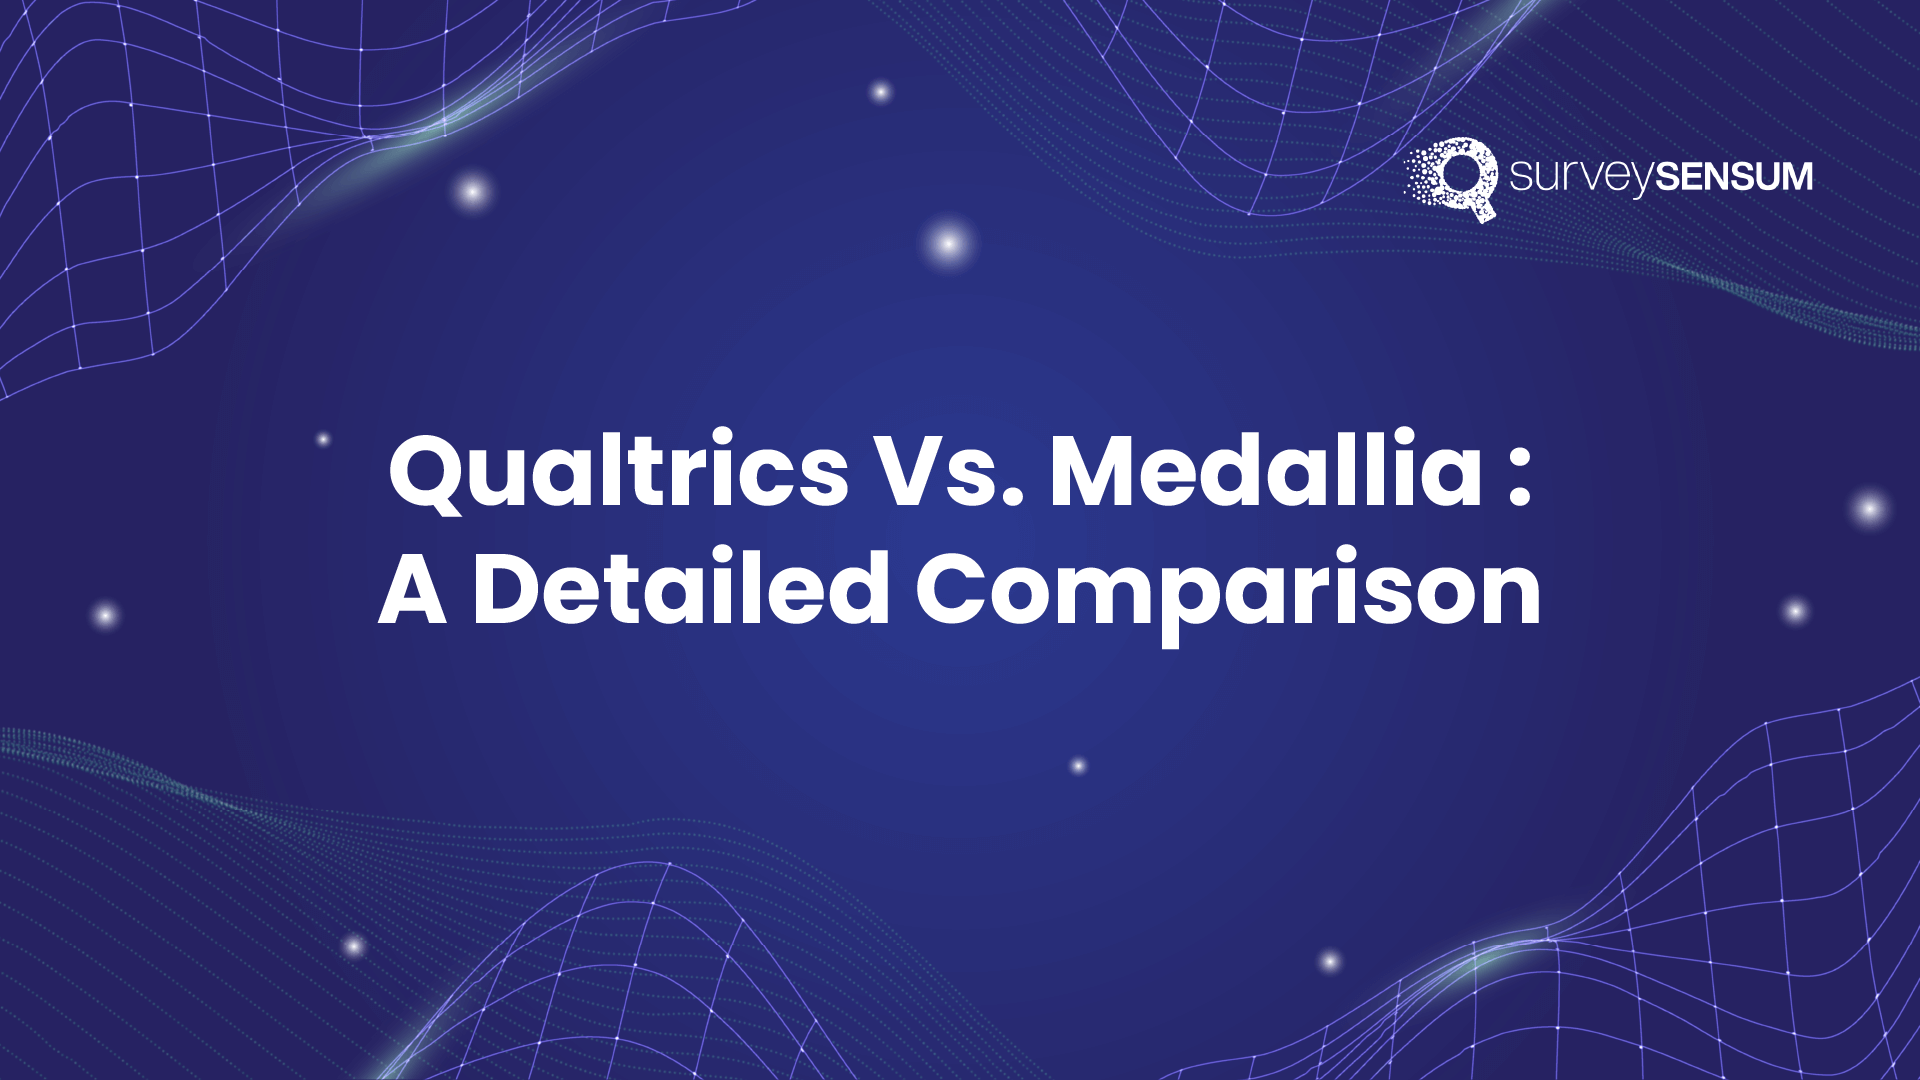 Qualtrics vs Medallia: A Detailed Comparison